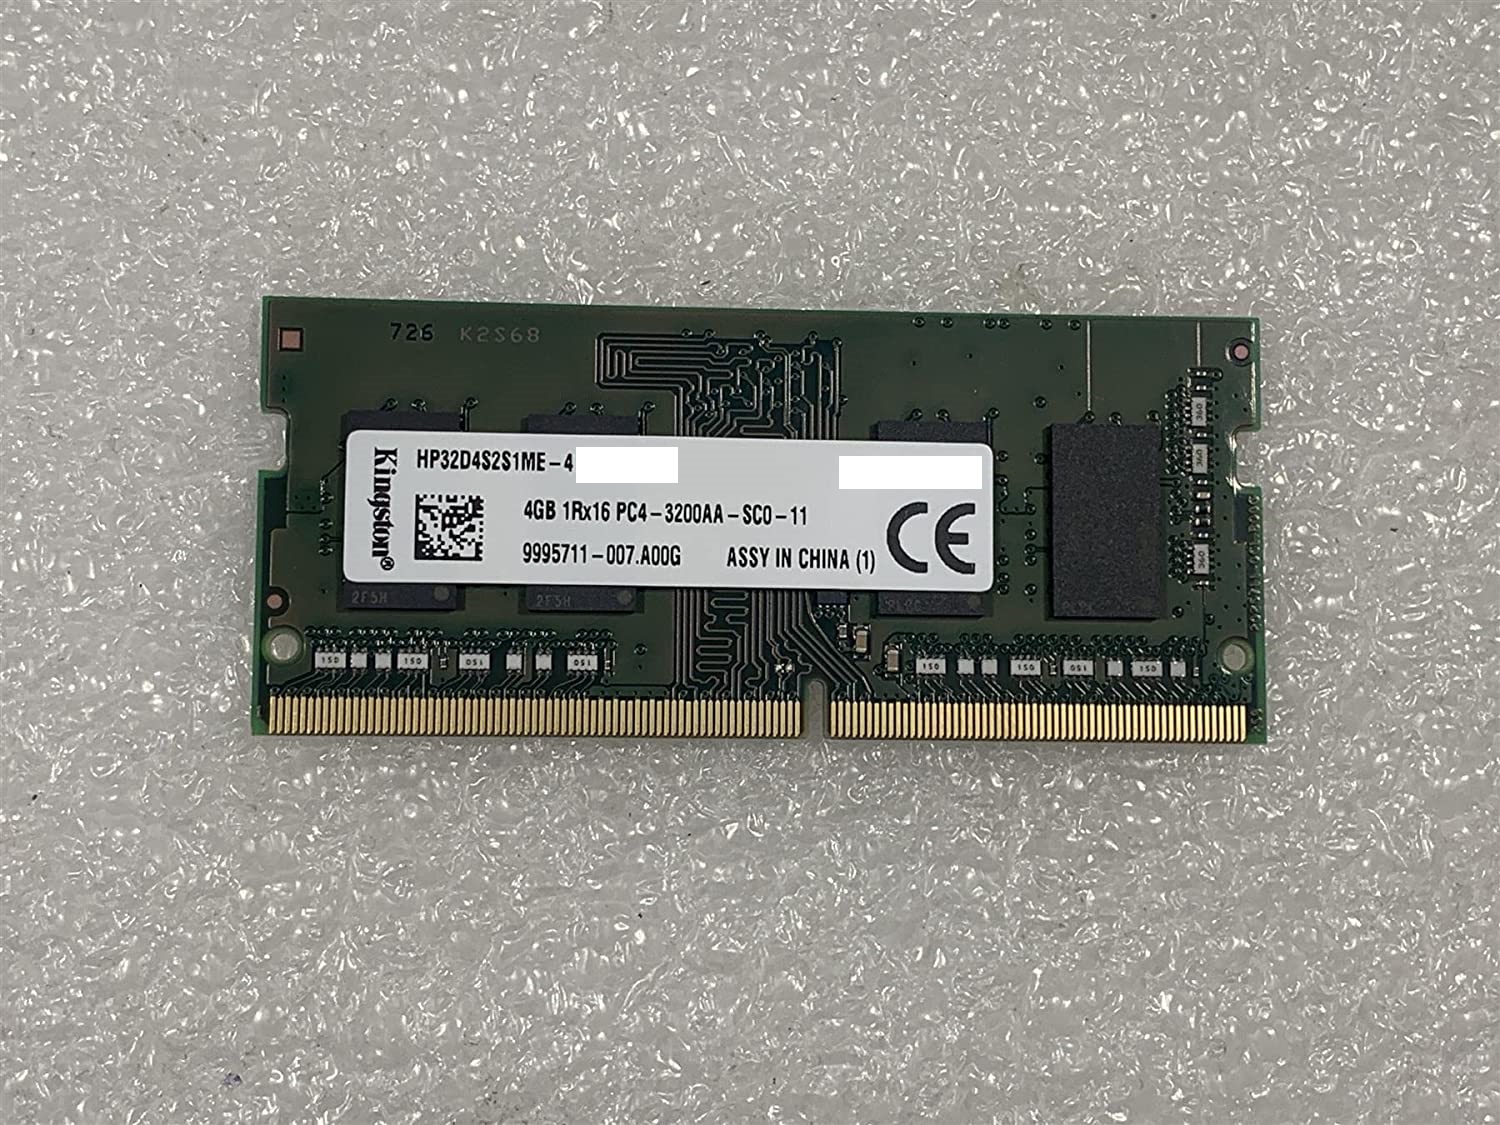 KINGSTON RAM 4GB SO-DDR4 3200MHz RAM PC4-25600 HP32D4S2S1ME-4 S2139MVWH